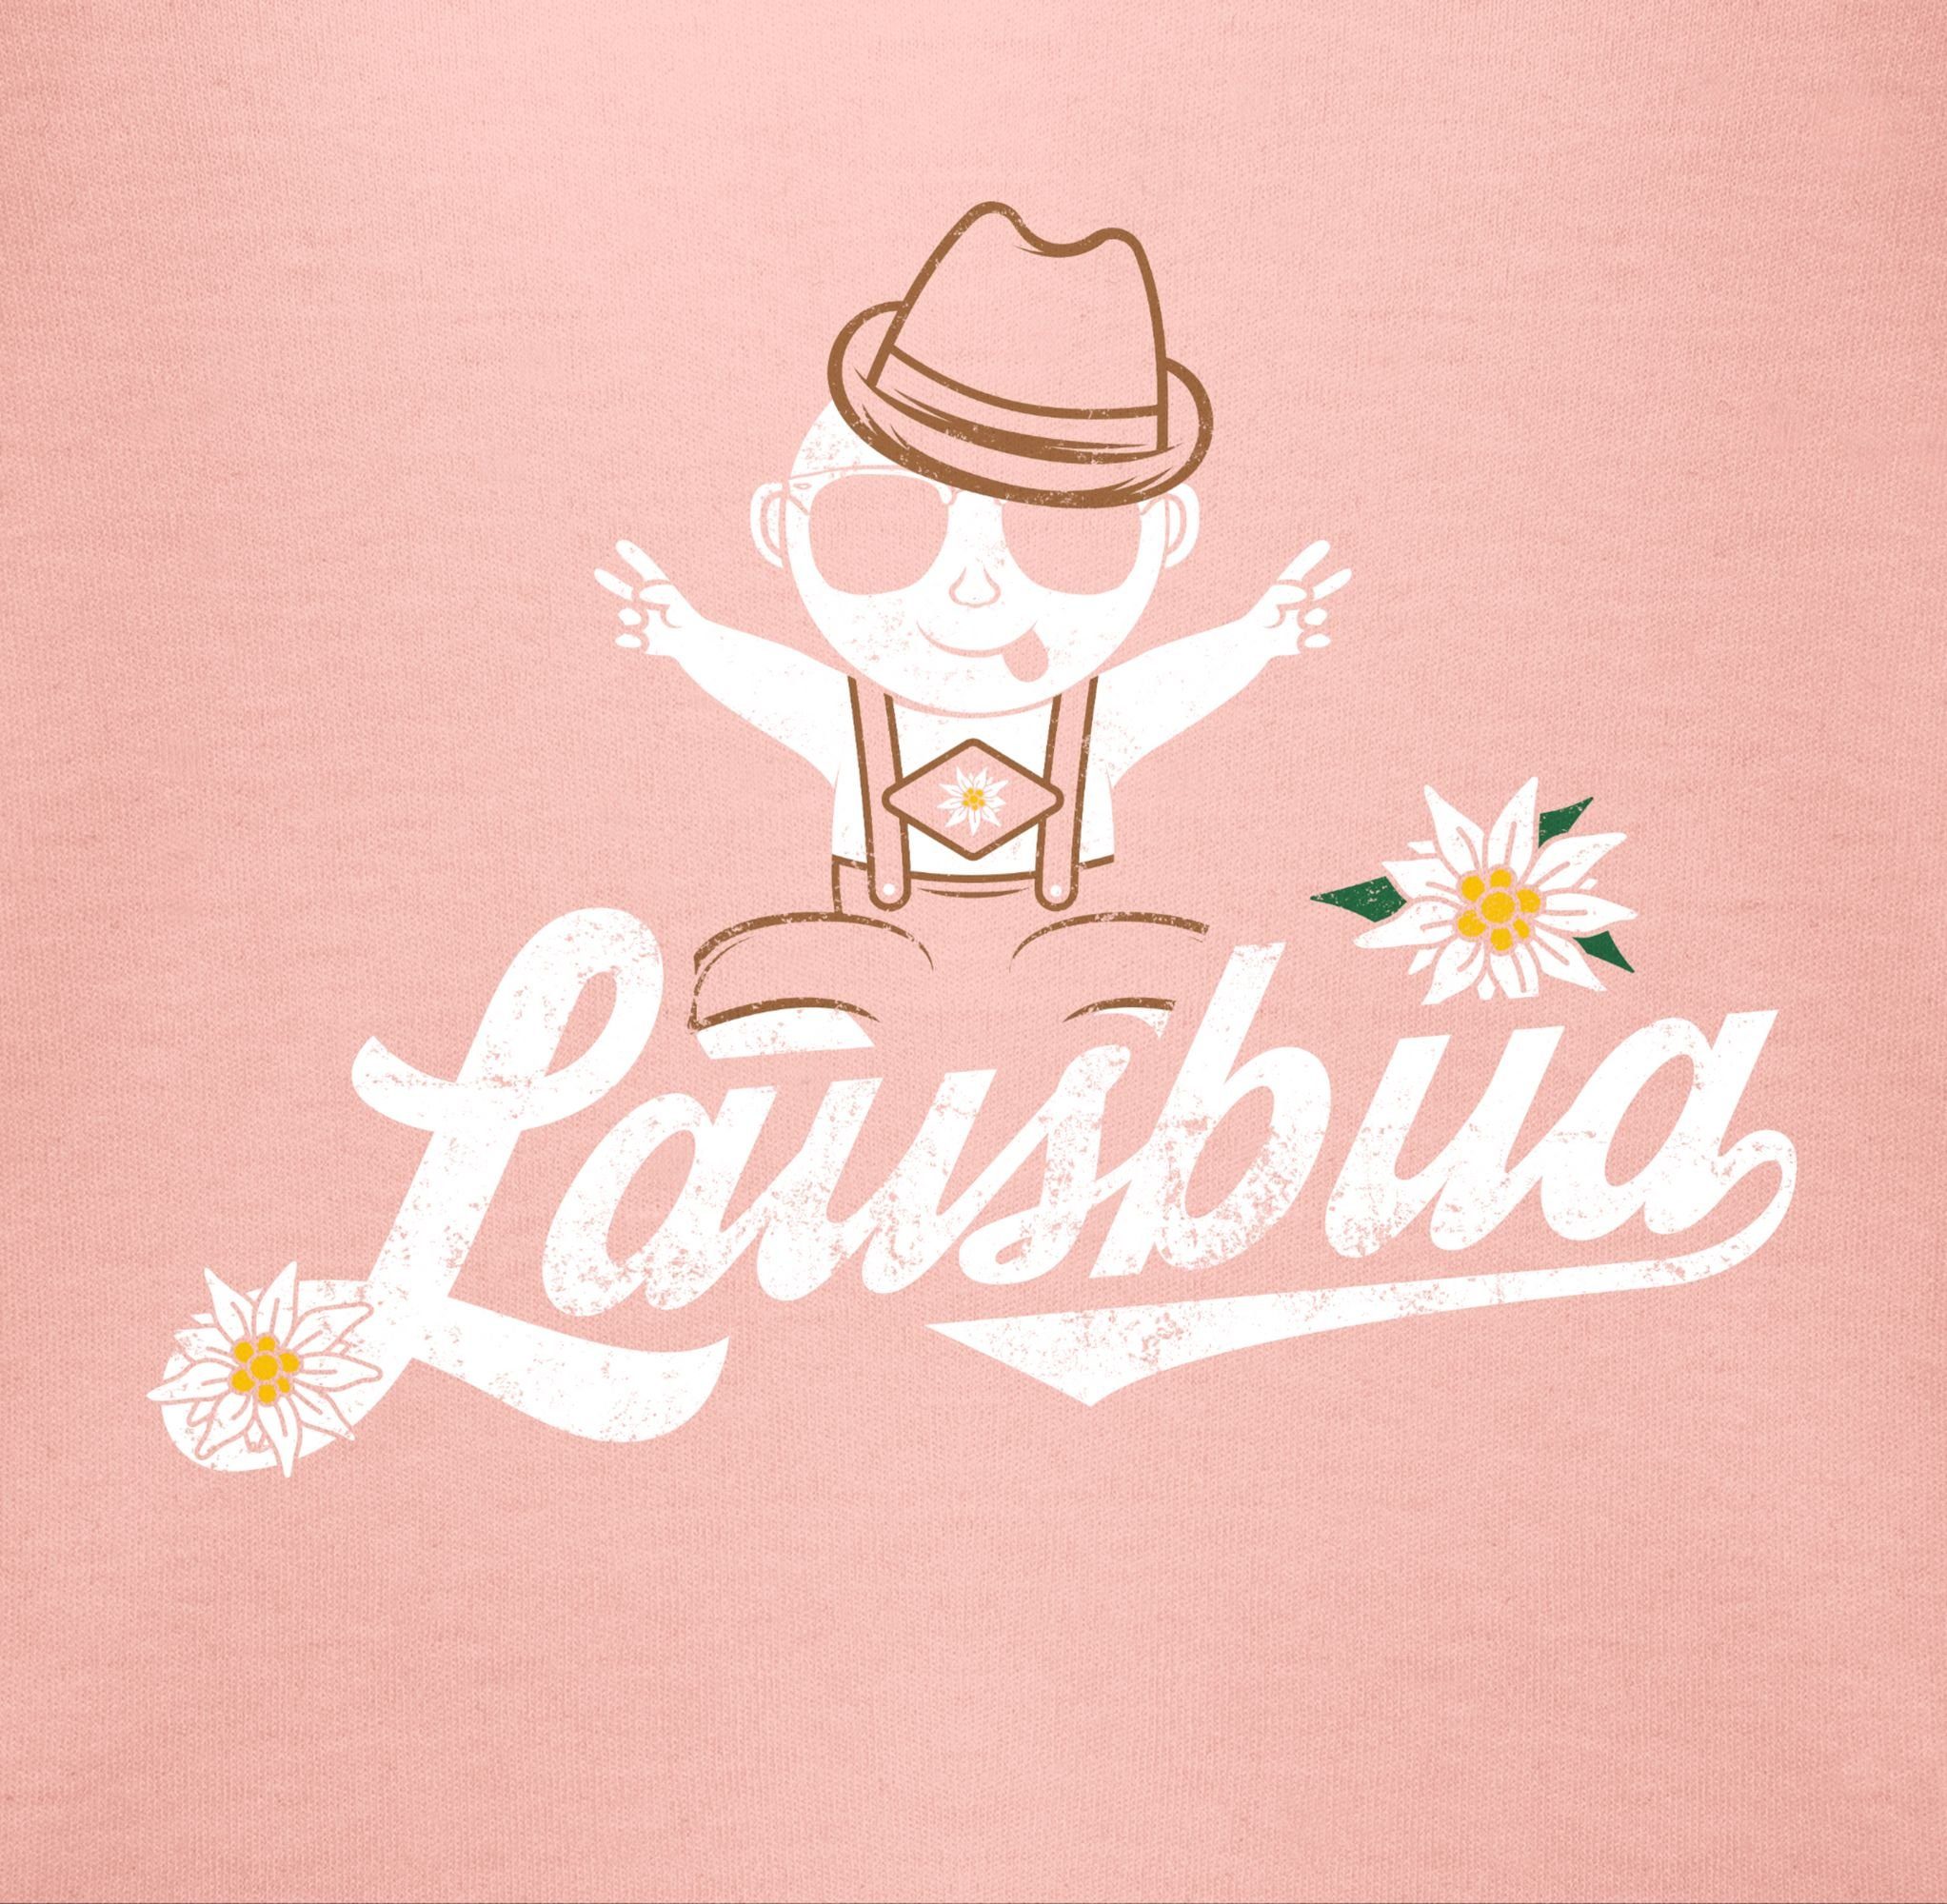 I Oktoberfest Lausbua Babyrosa 3 Outfit Witzig Baby Lustig Shirtbody Baby Shirtracer Mode für Wiesn